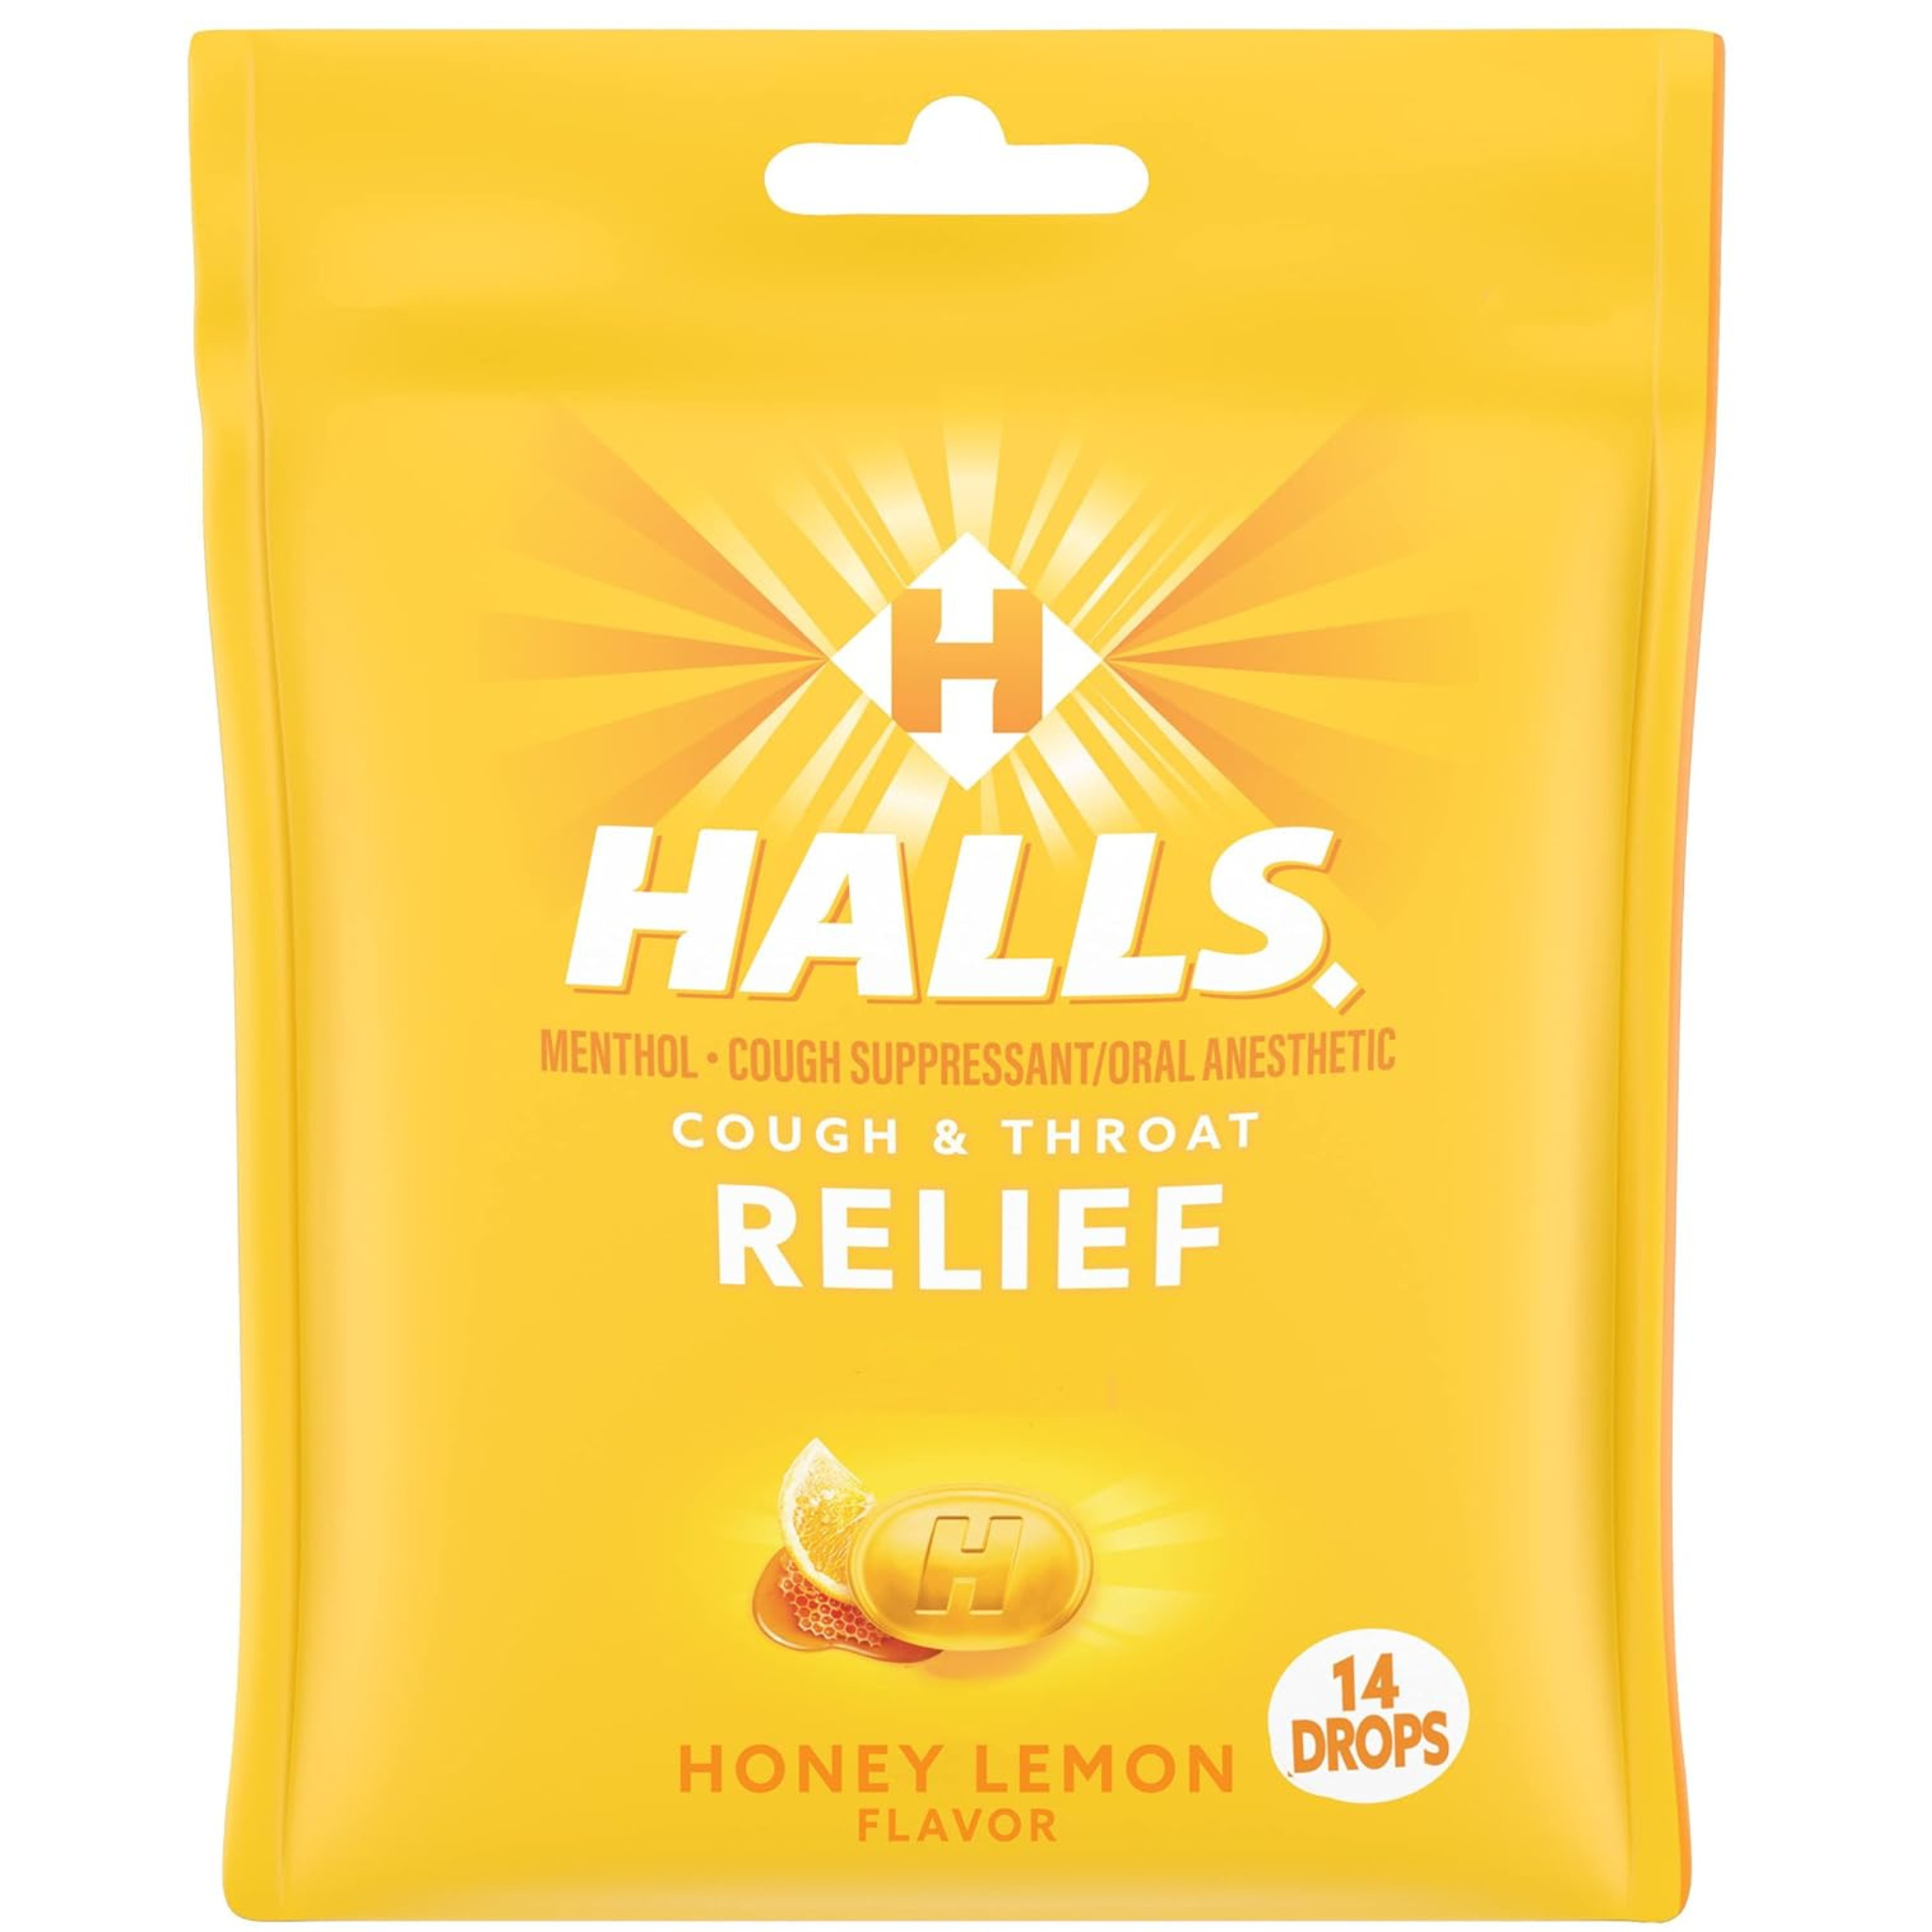 Halls Honey Lemon 14 Drops